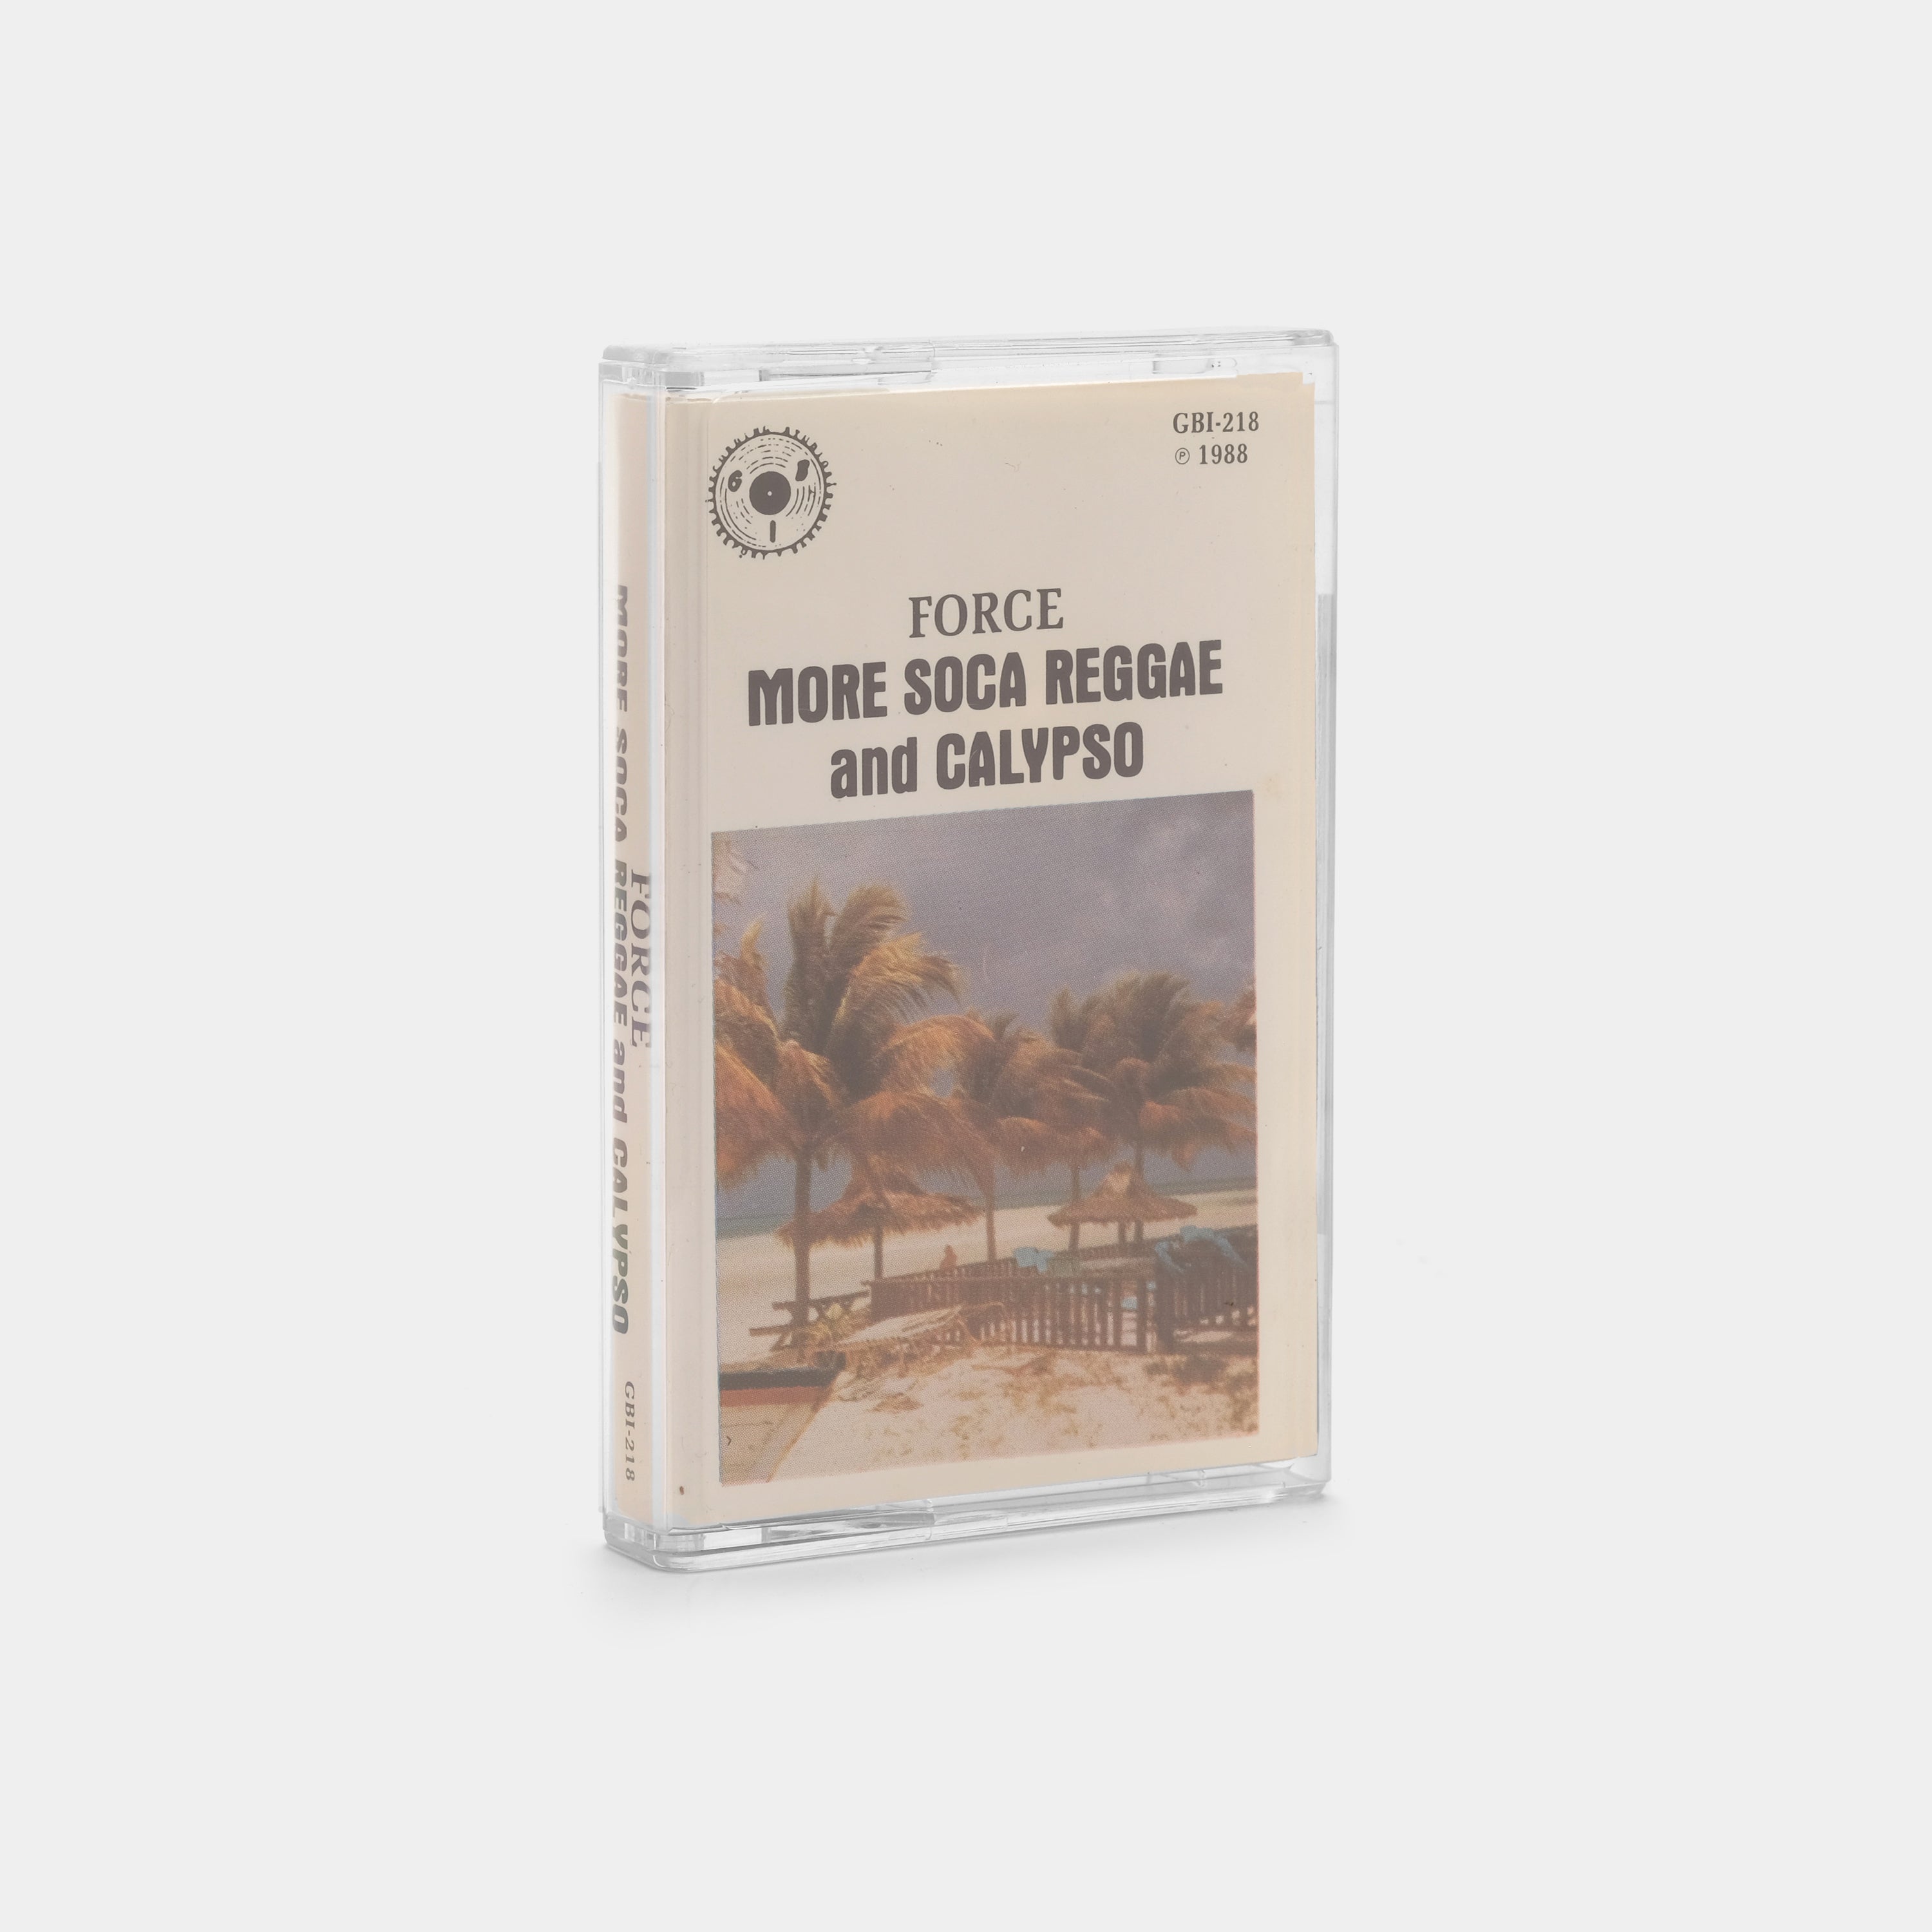 Force - More Soca Reggae and Calypso Cassette Tape